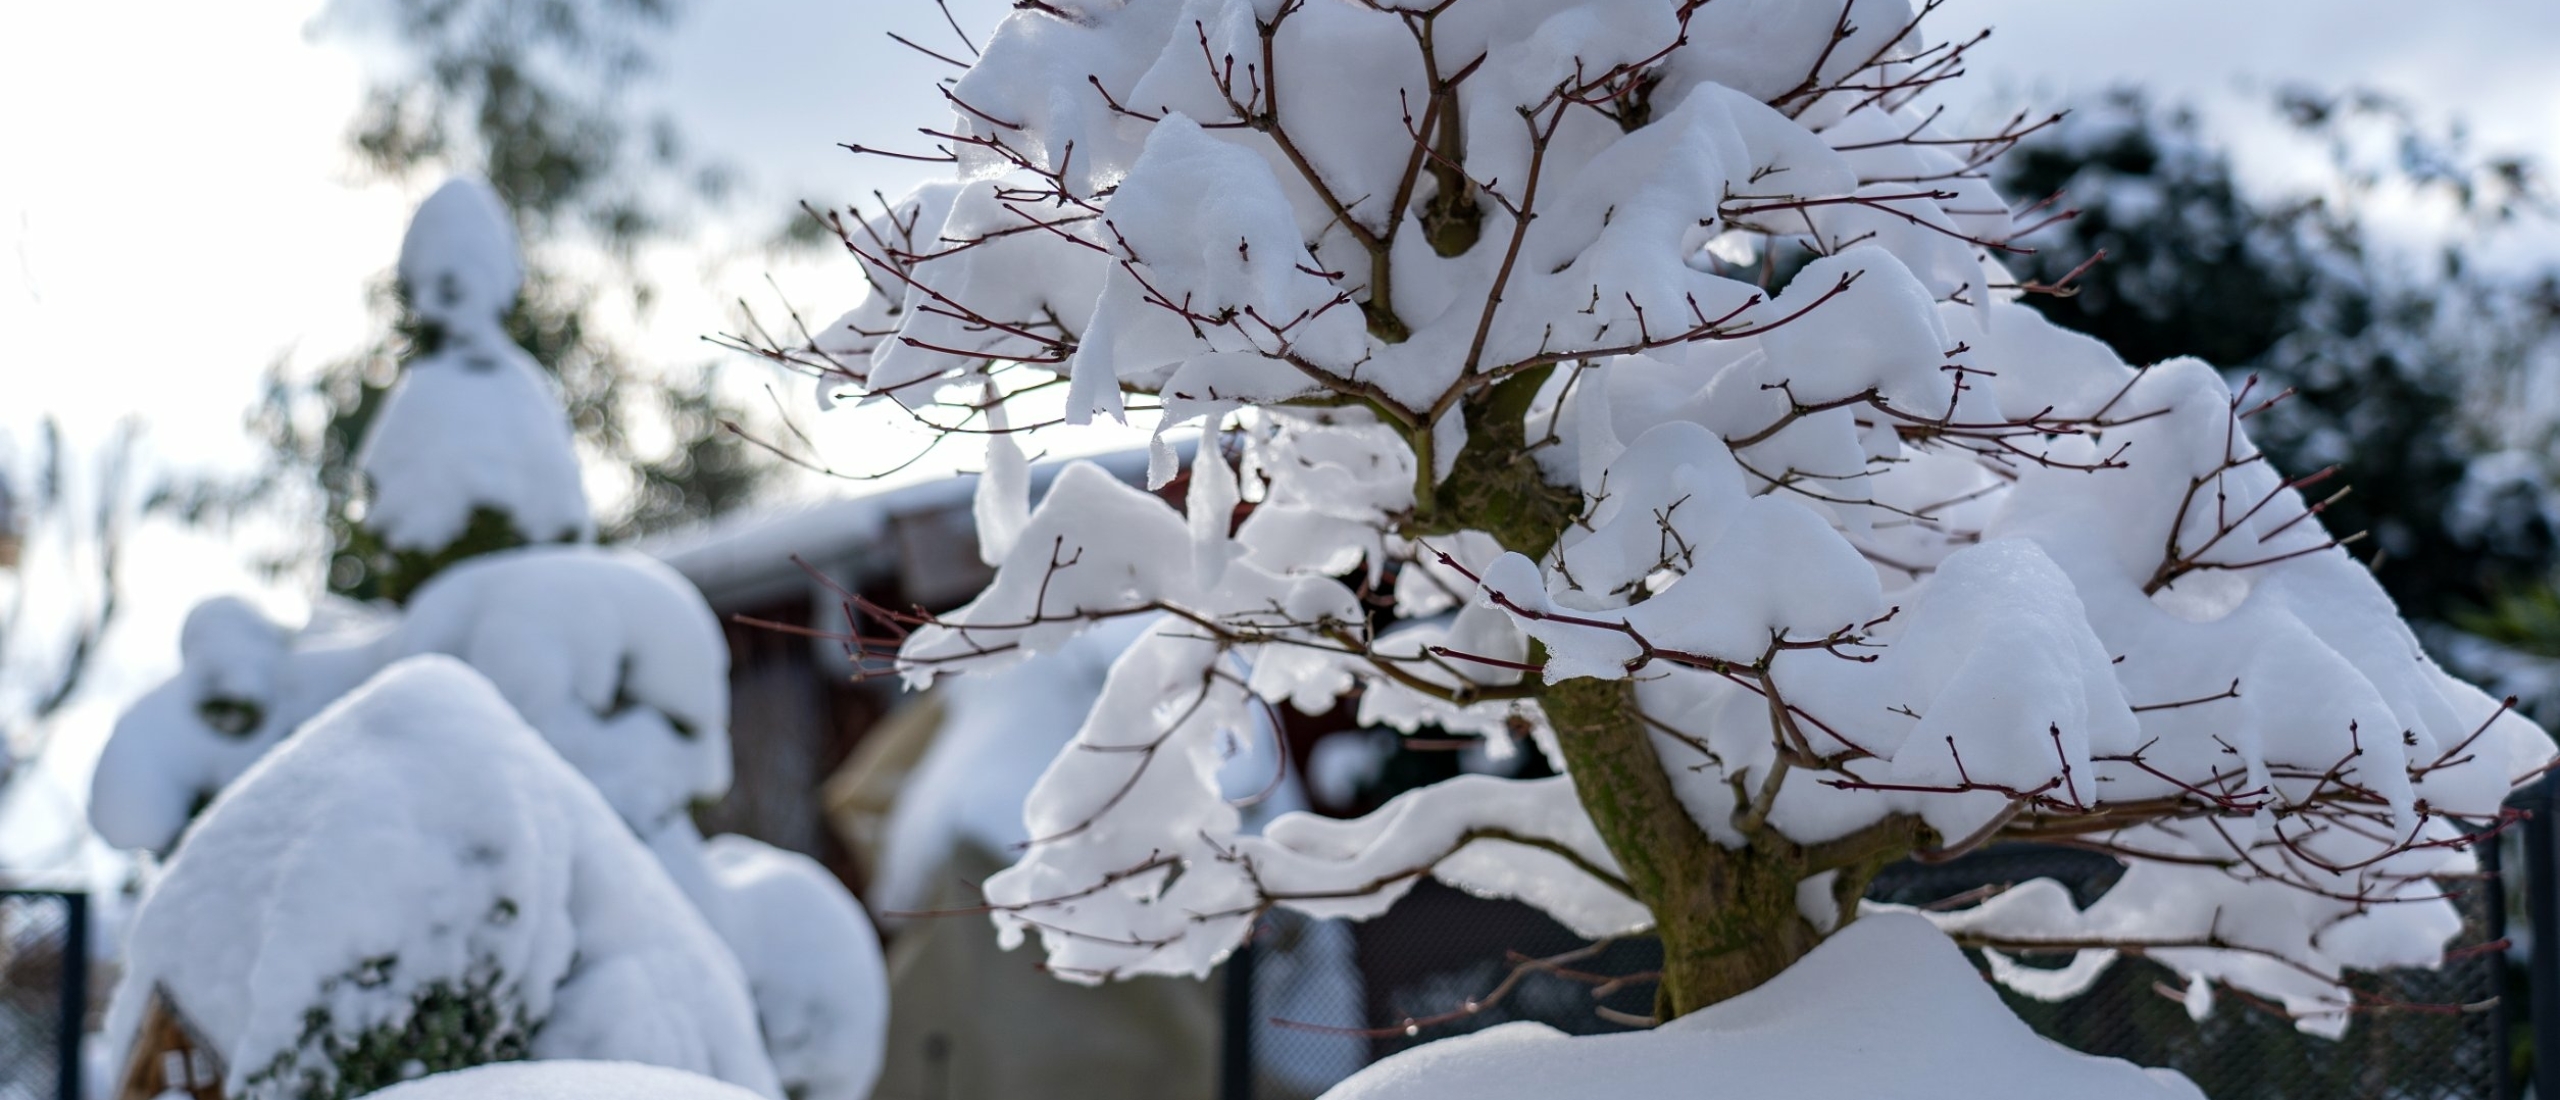 Bonsai boom verzorgen in de winter